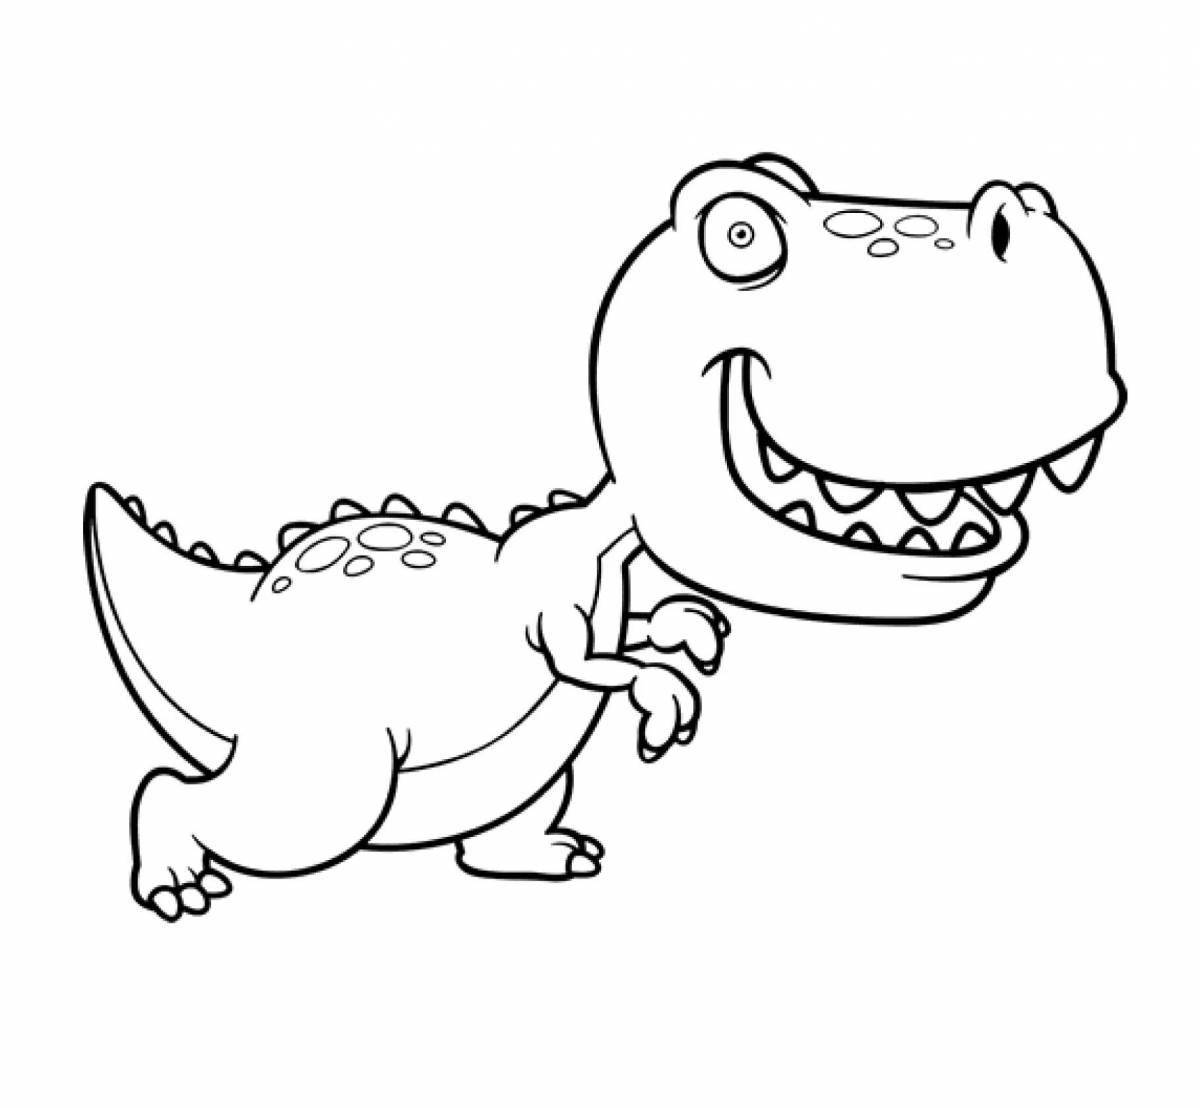 Adorable Tyrannosaurus Rex Coloring Book for Kids